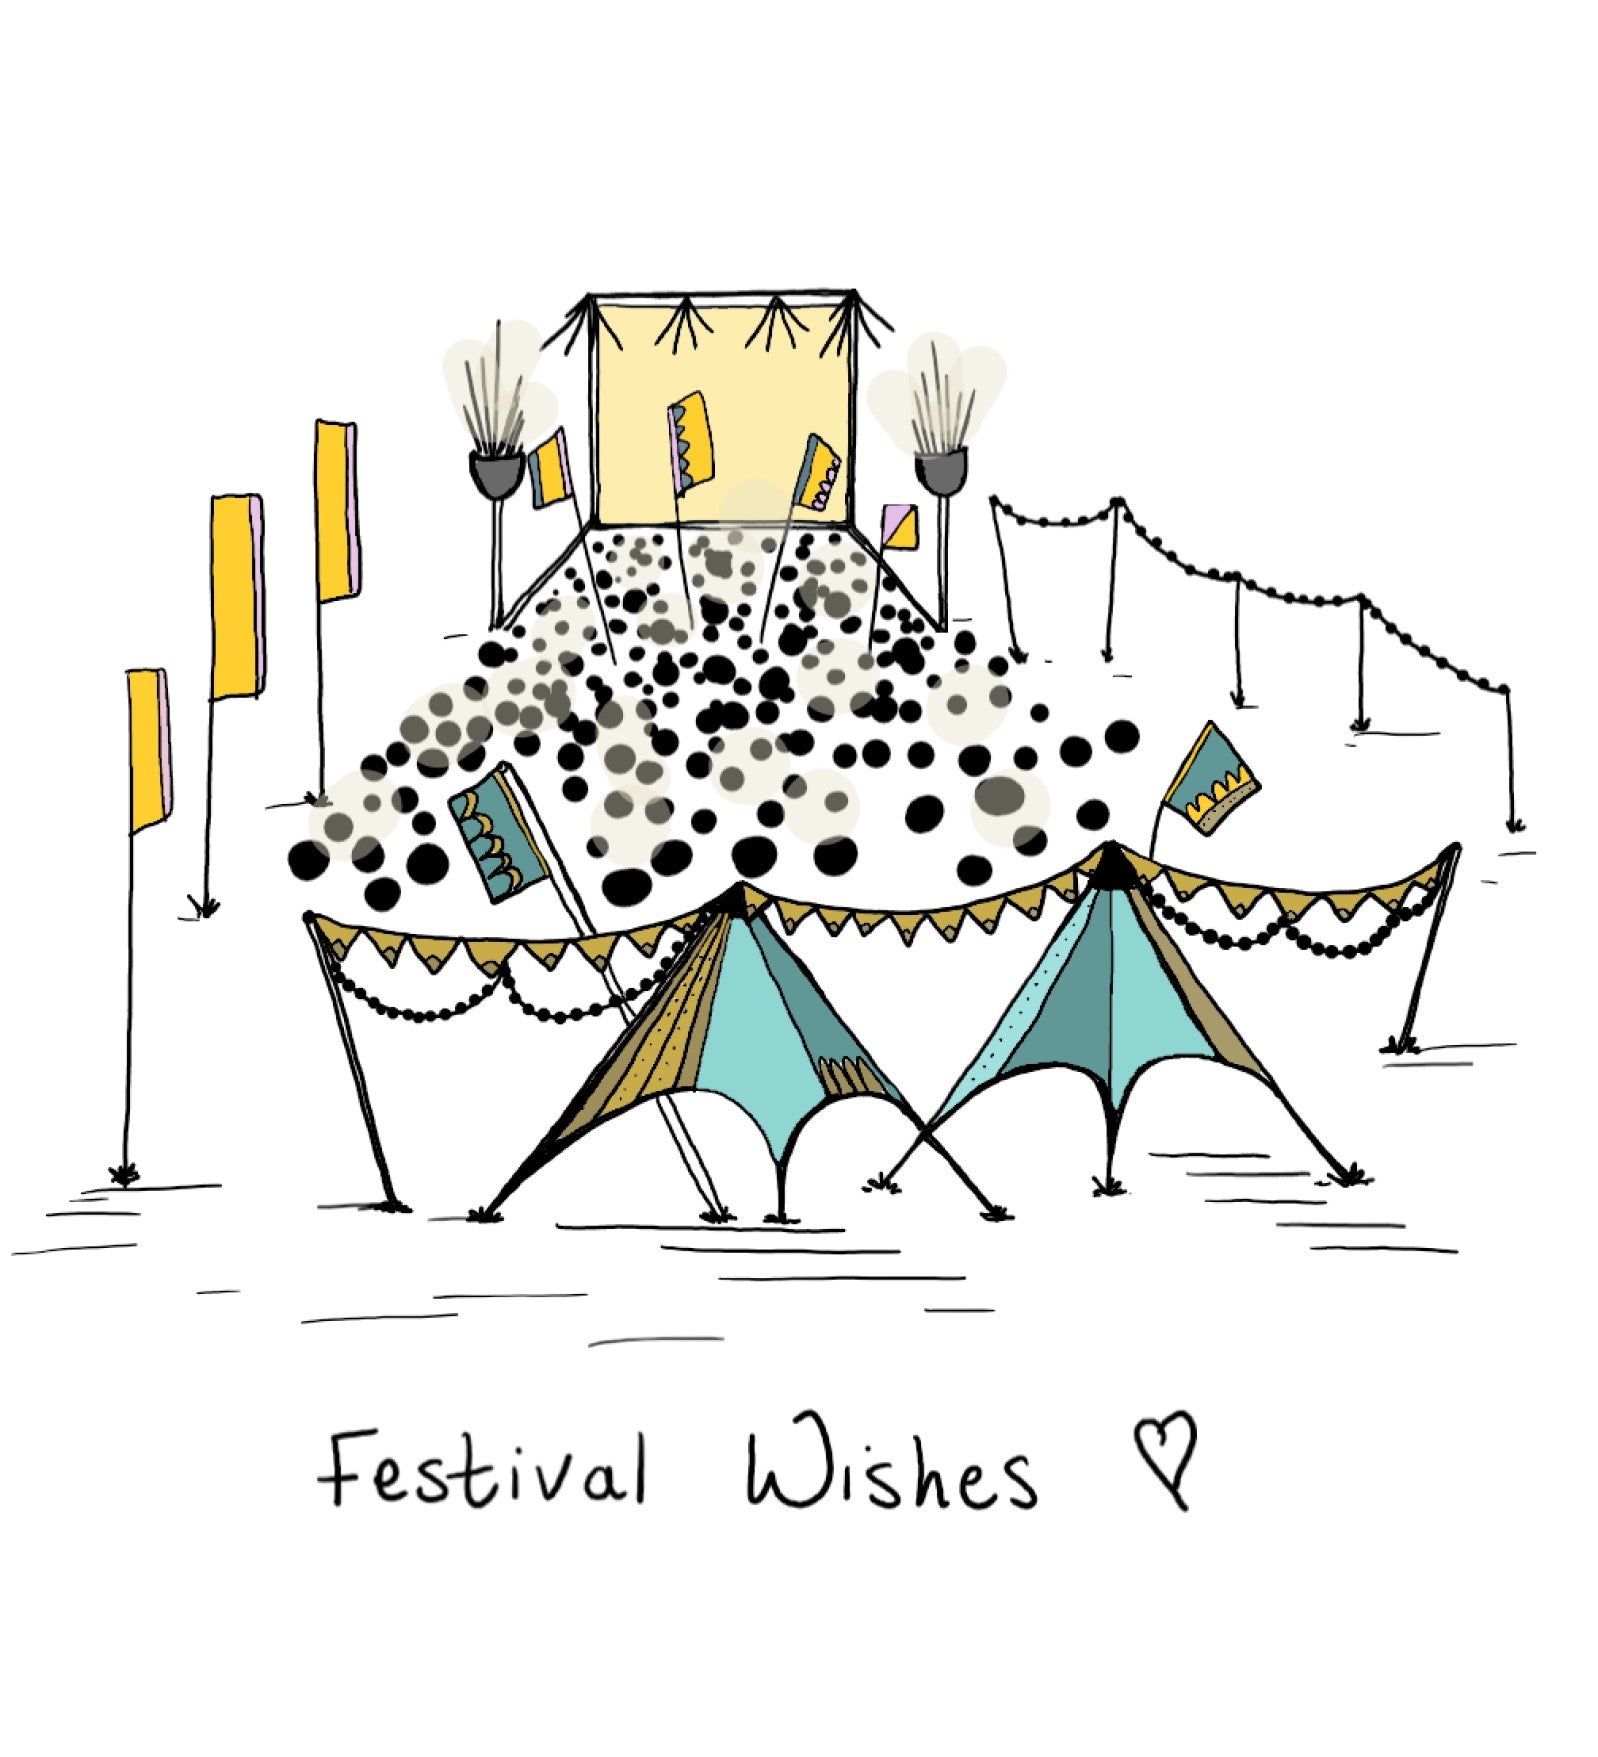 Festival Wishes - festival inspired greeting car